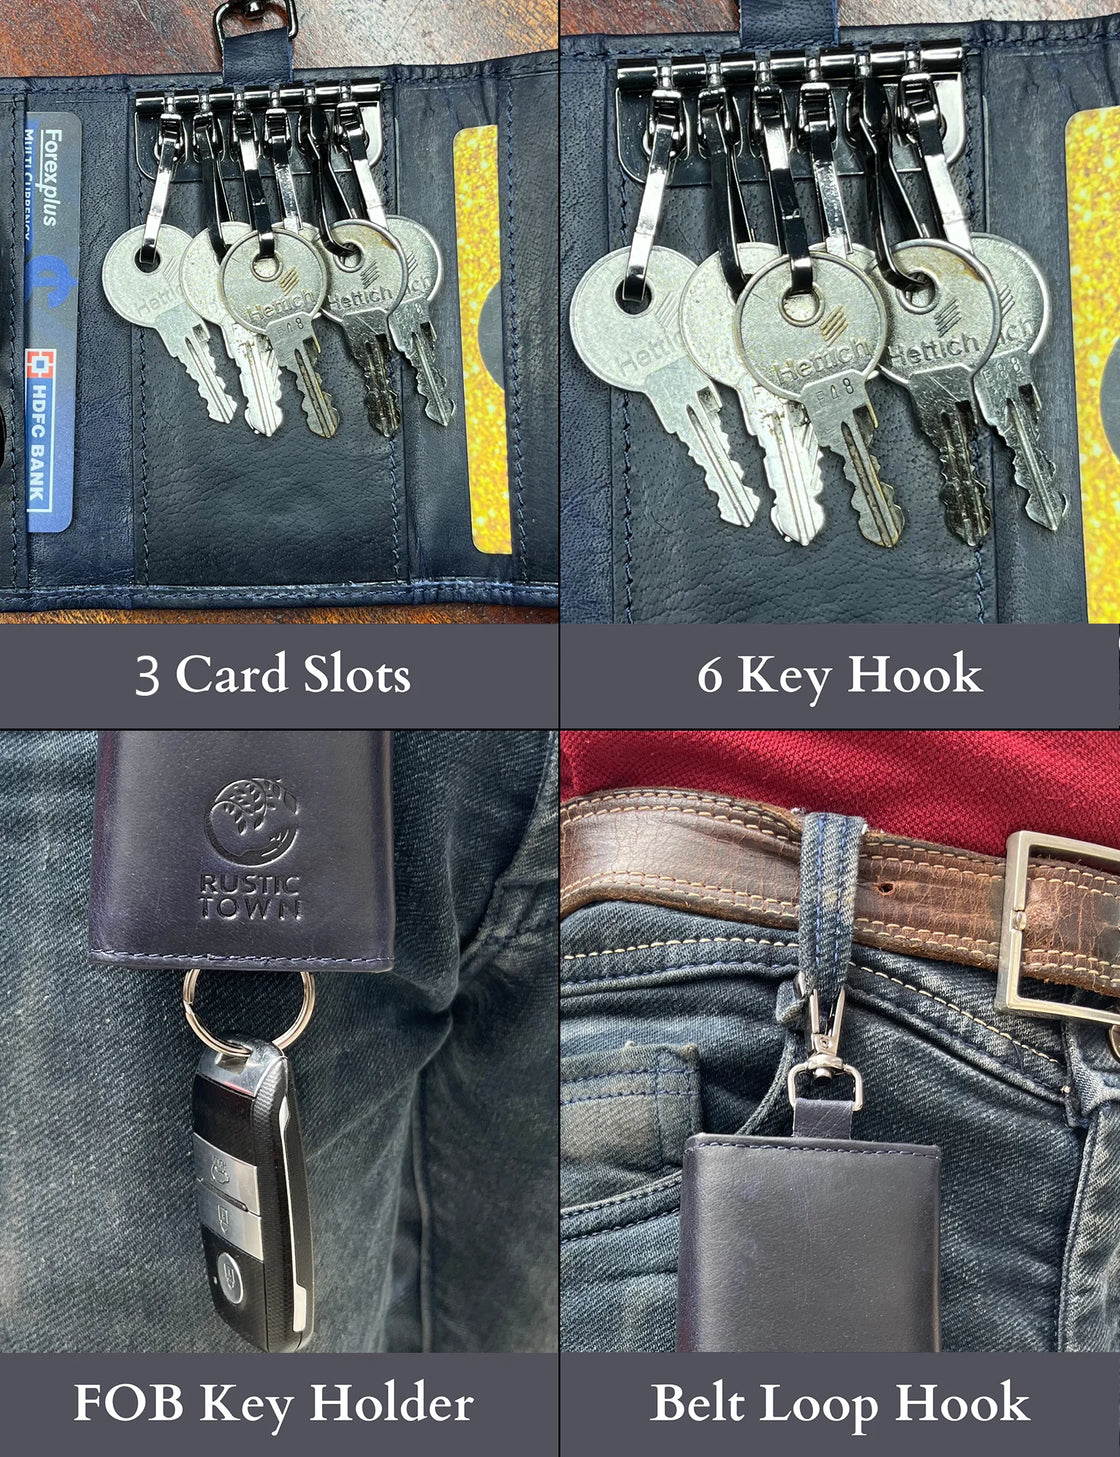 Keychain Pad With Hooks Leather Key Case Keychain For Key Holder